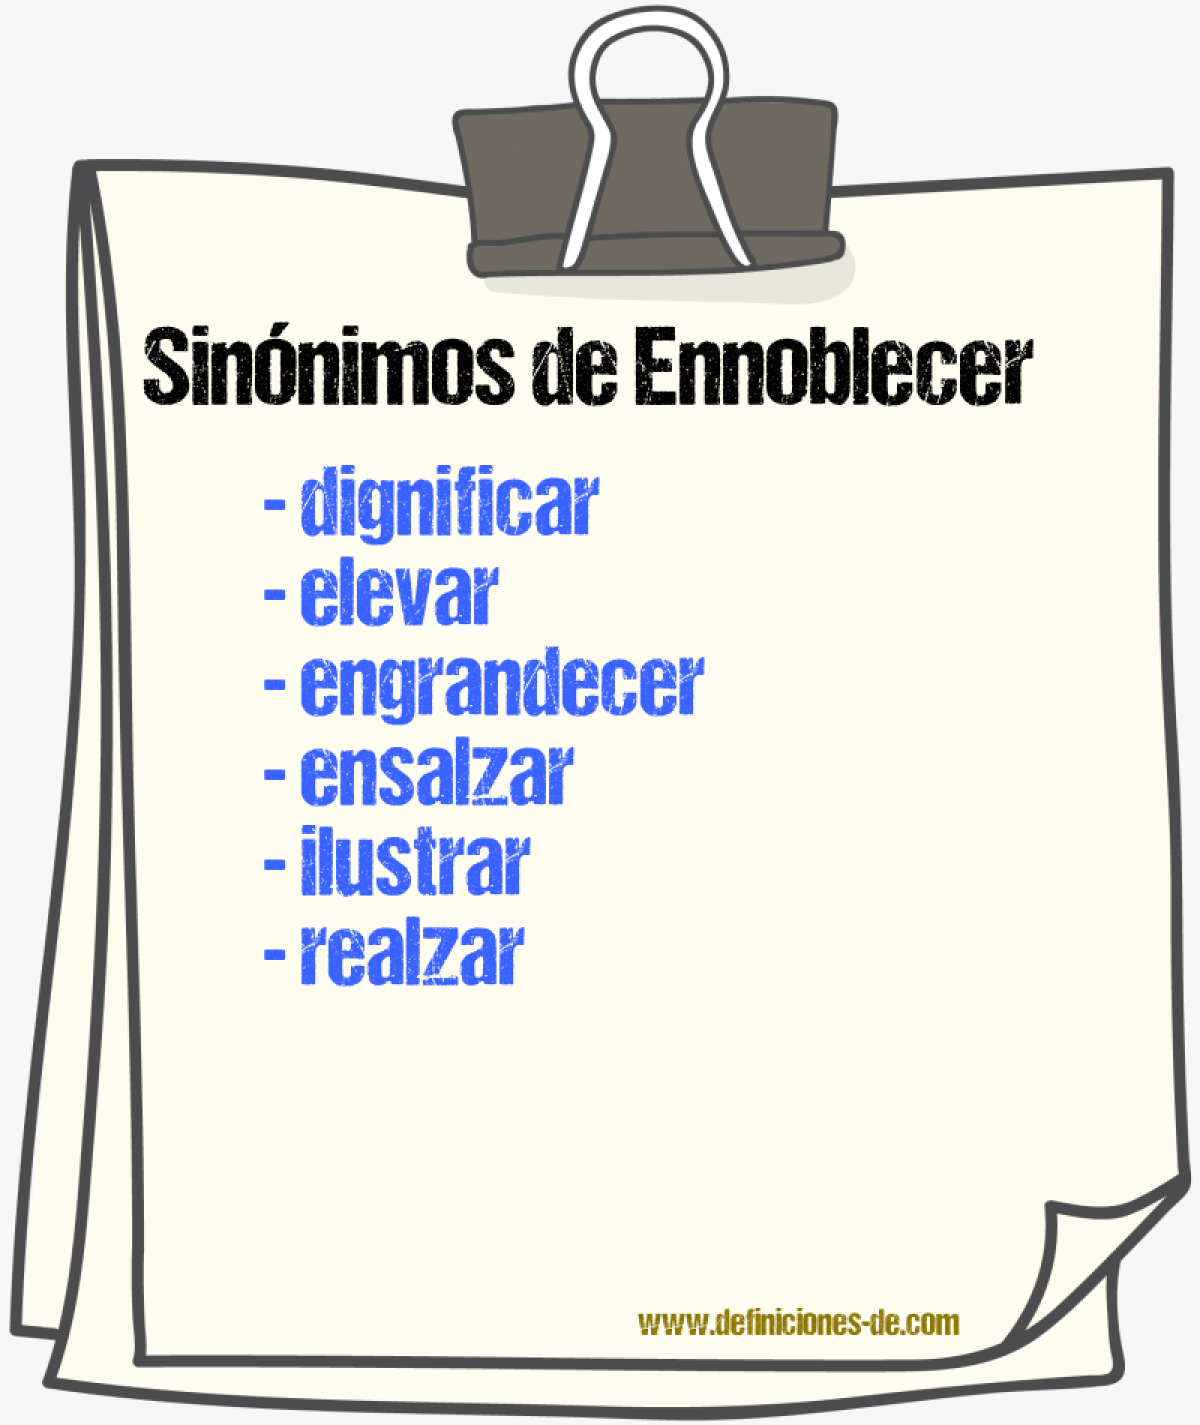 Sinónimos de ennoblecer